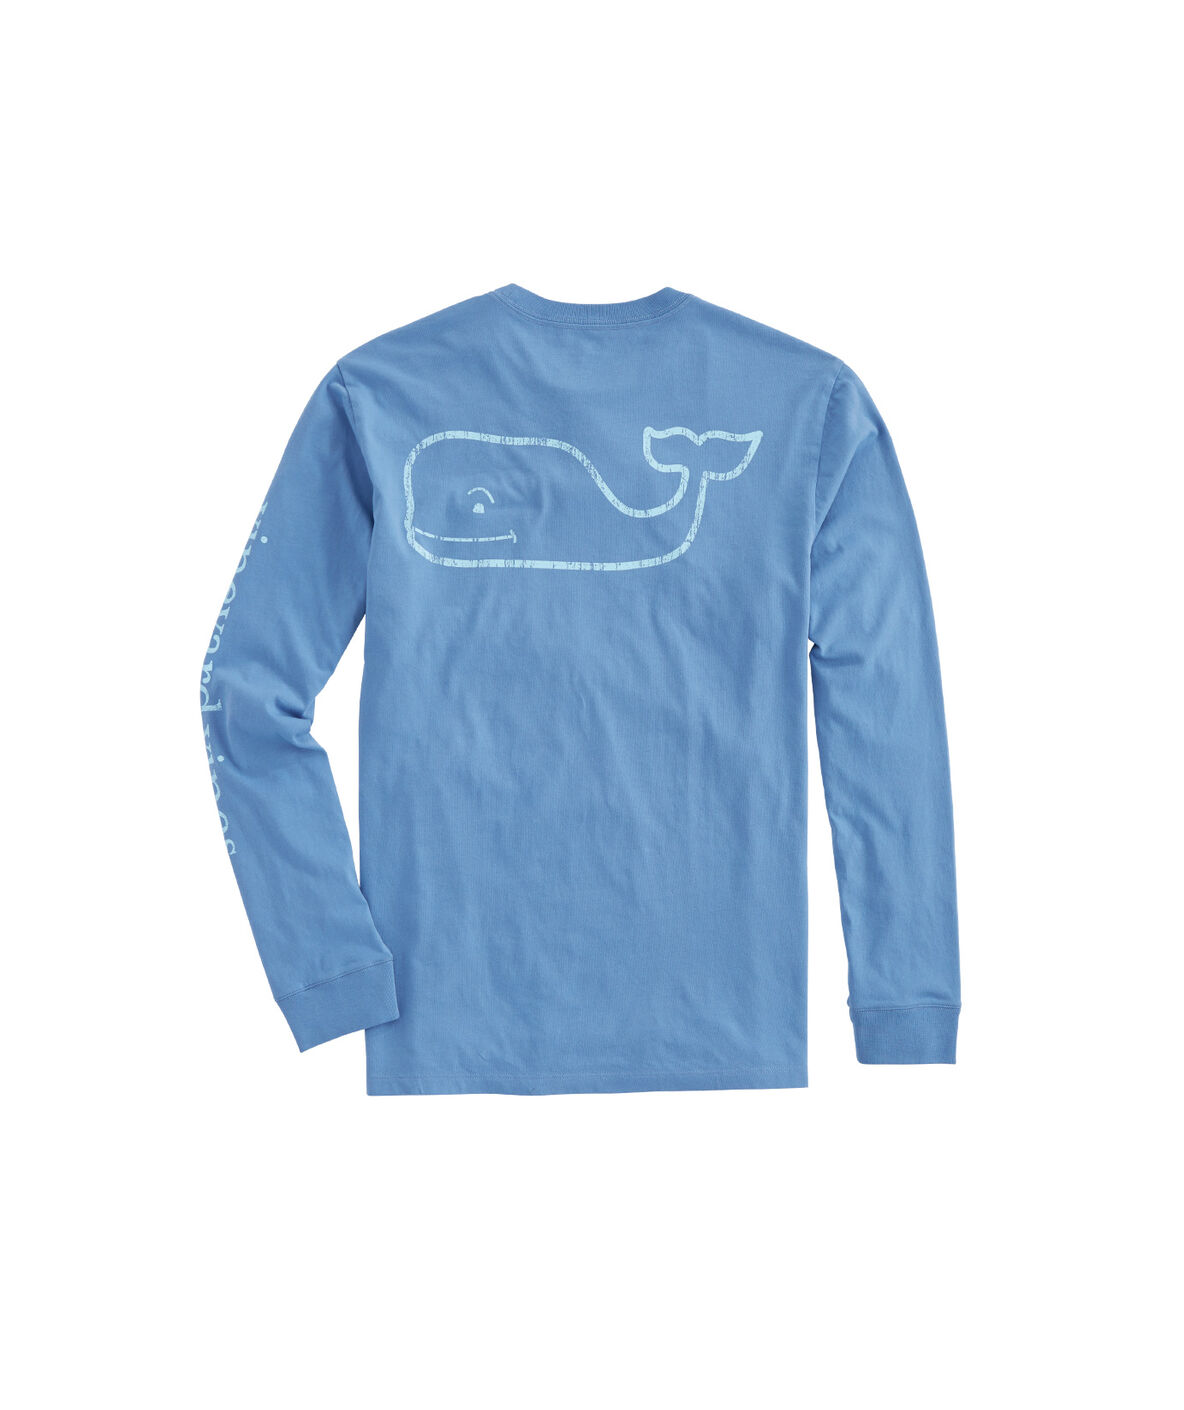 Shop Long-Sleeve Vintage Whale Graphic Pocket T-Shirt at vineyard vines